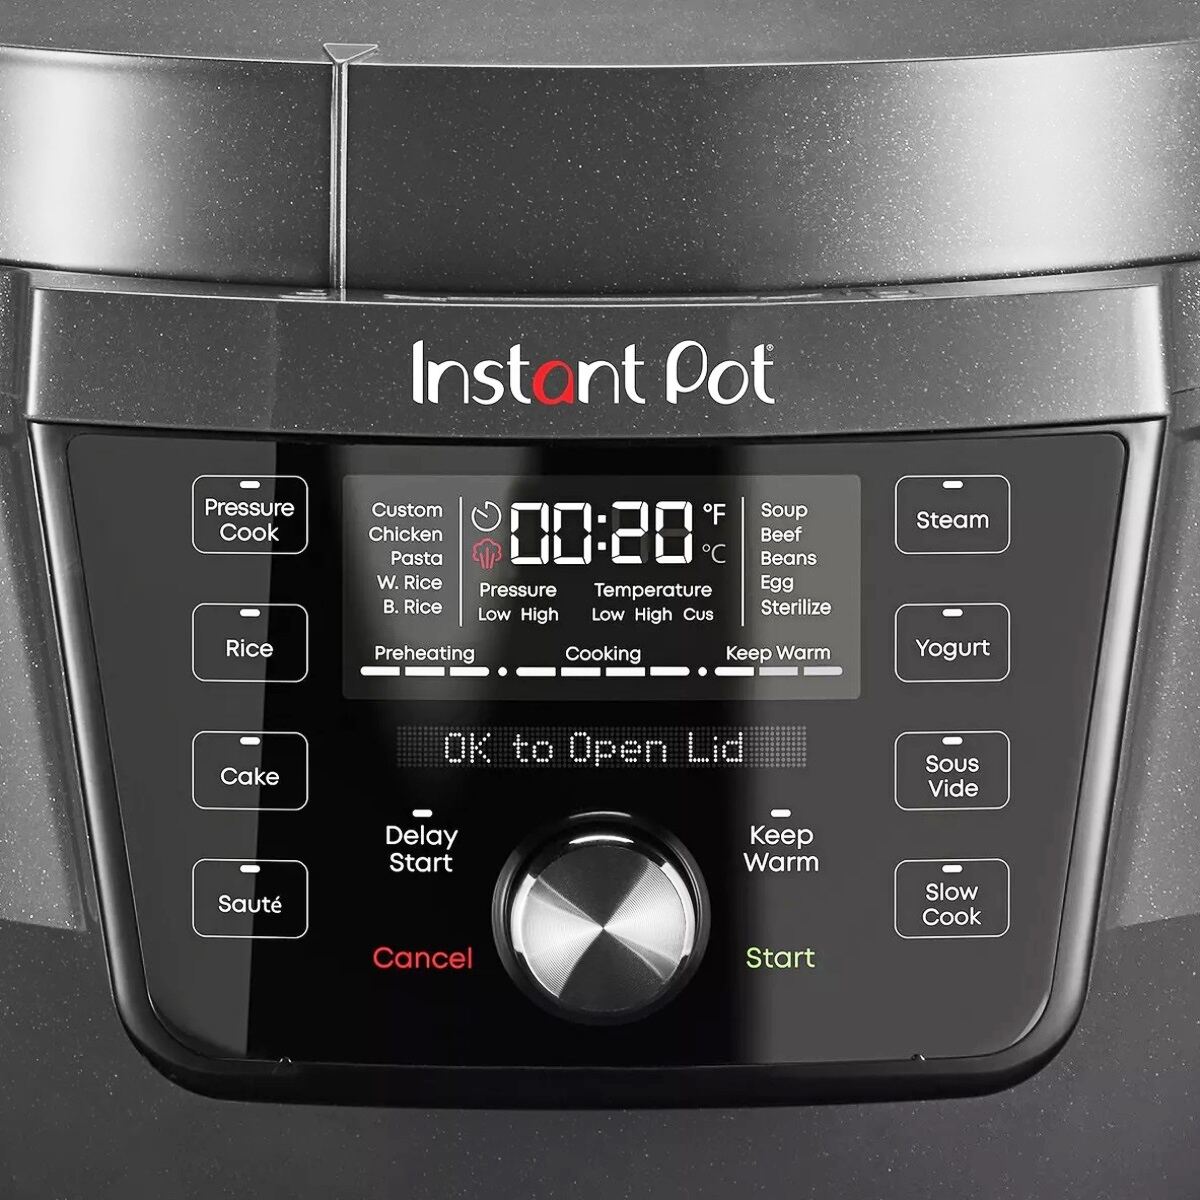 instant pot rio: cooking programs